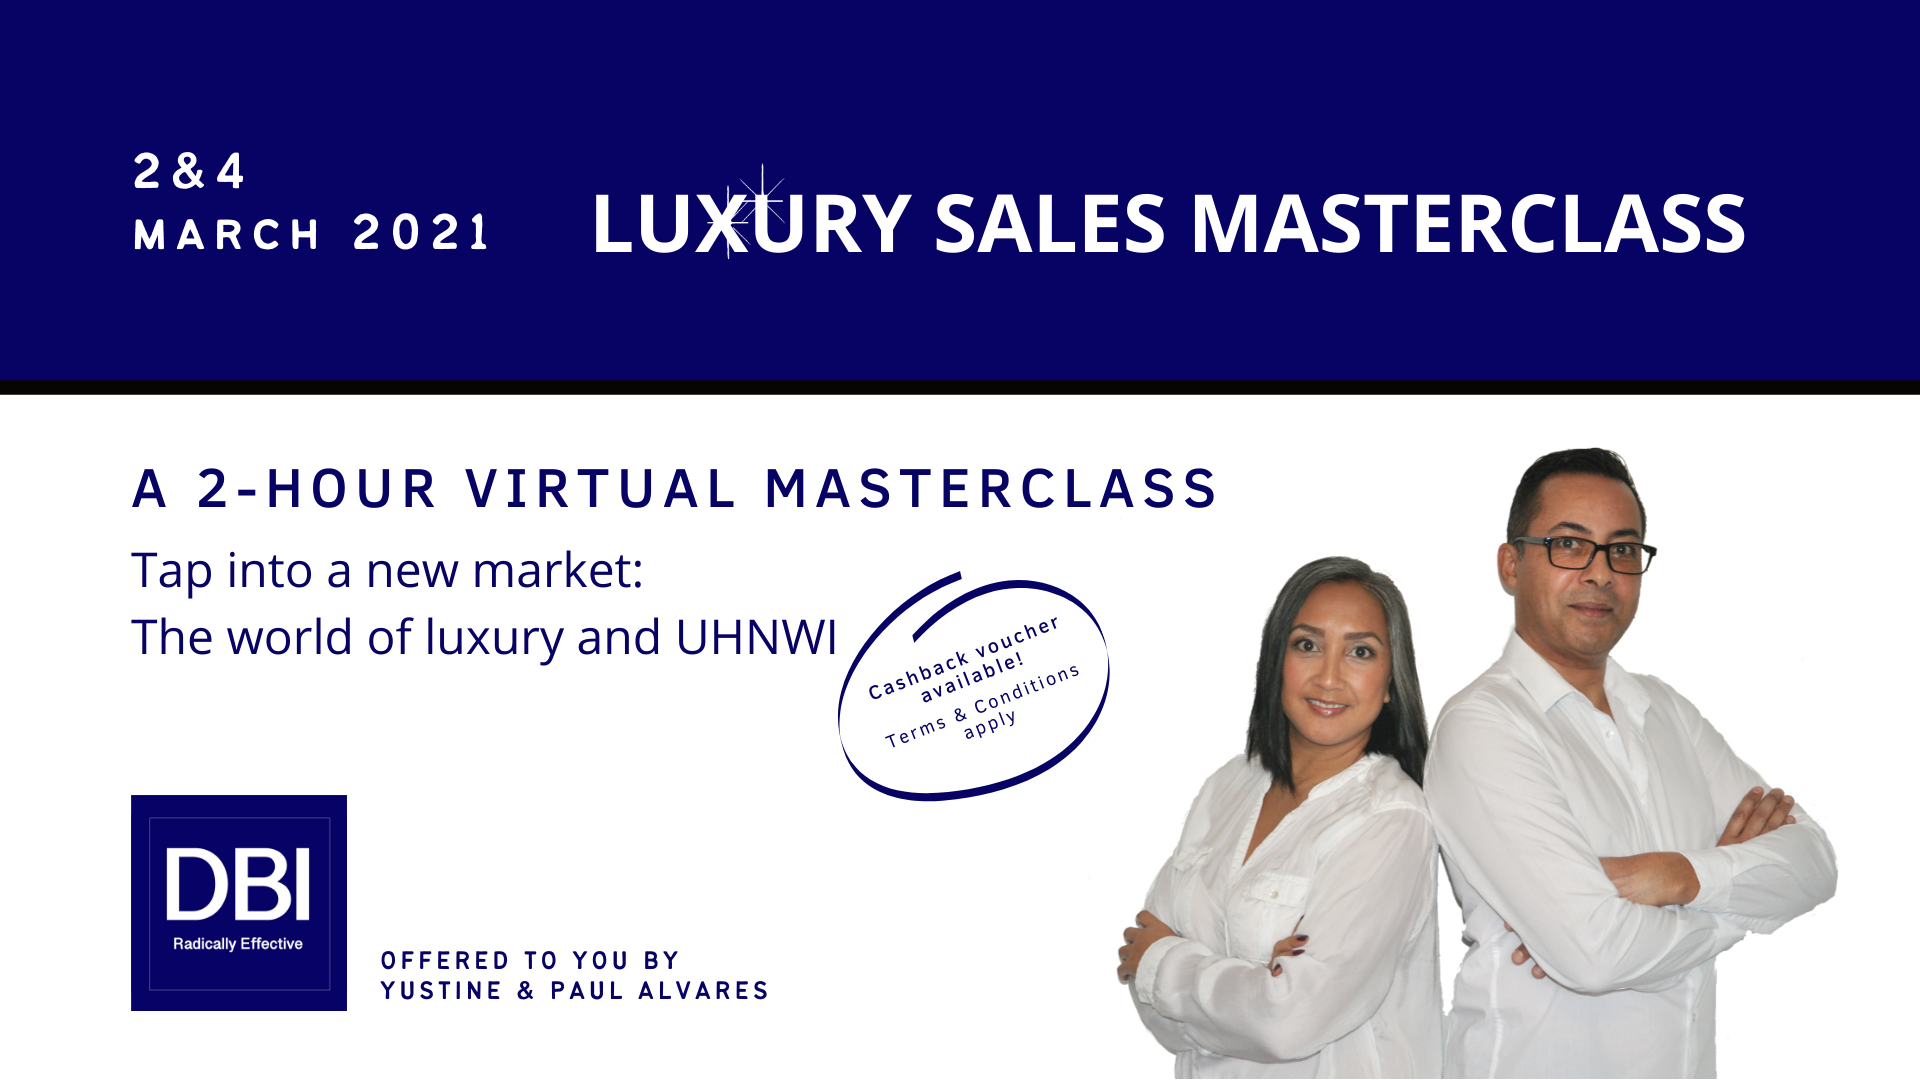 DBI Luxury Sales Masterclass